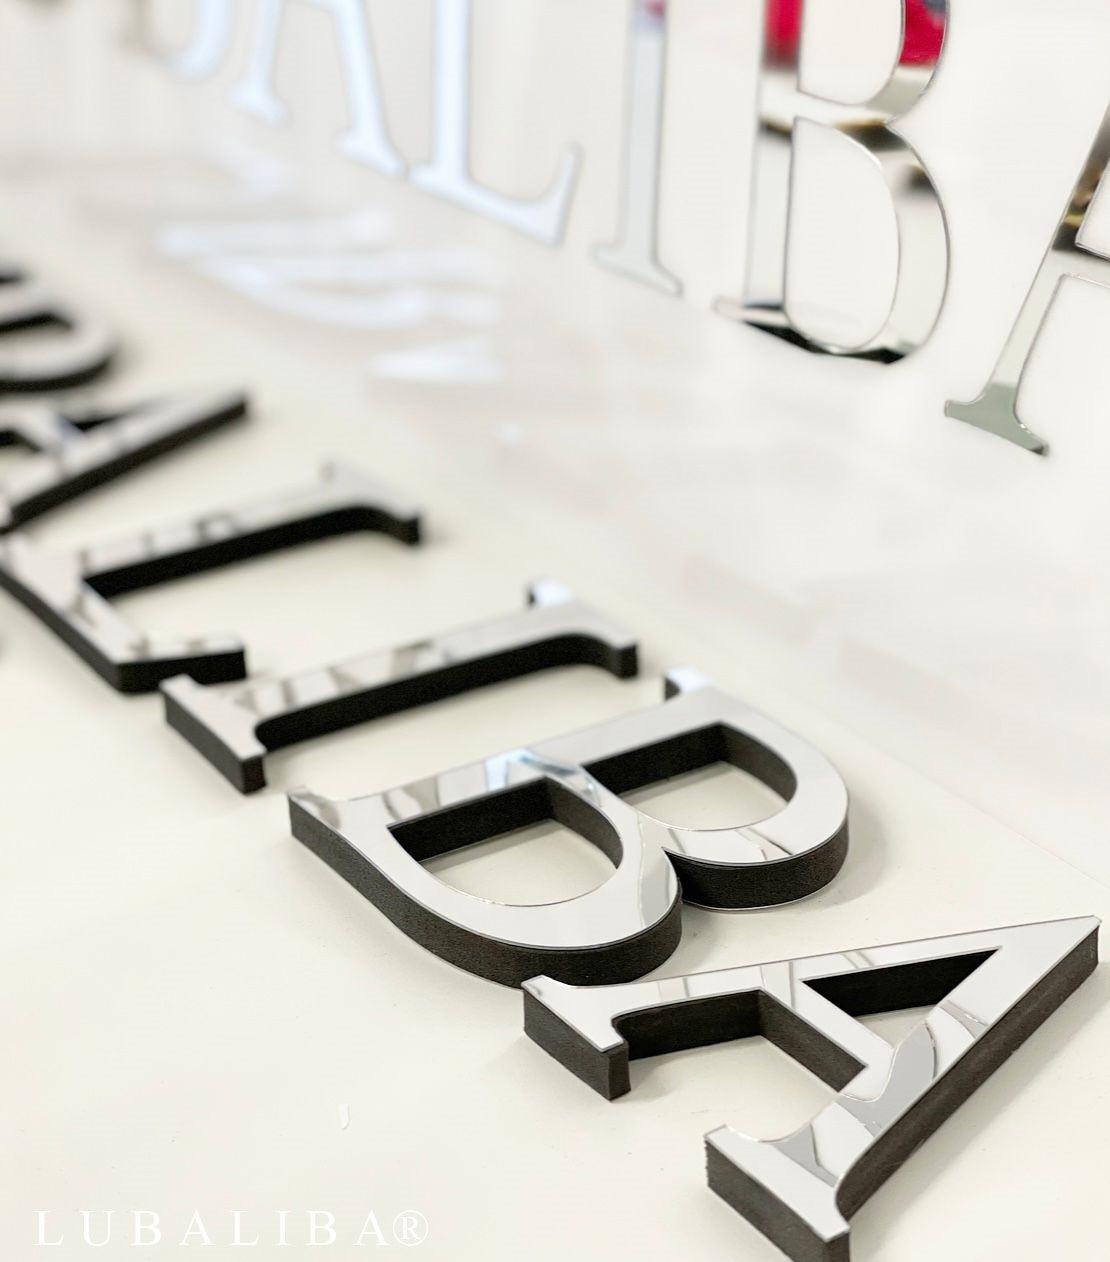 3D Buchstaben aus Acryl Deko/Werbung in Silber – B2B Lubaliba